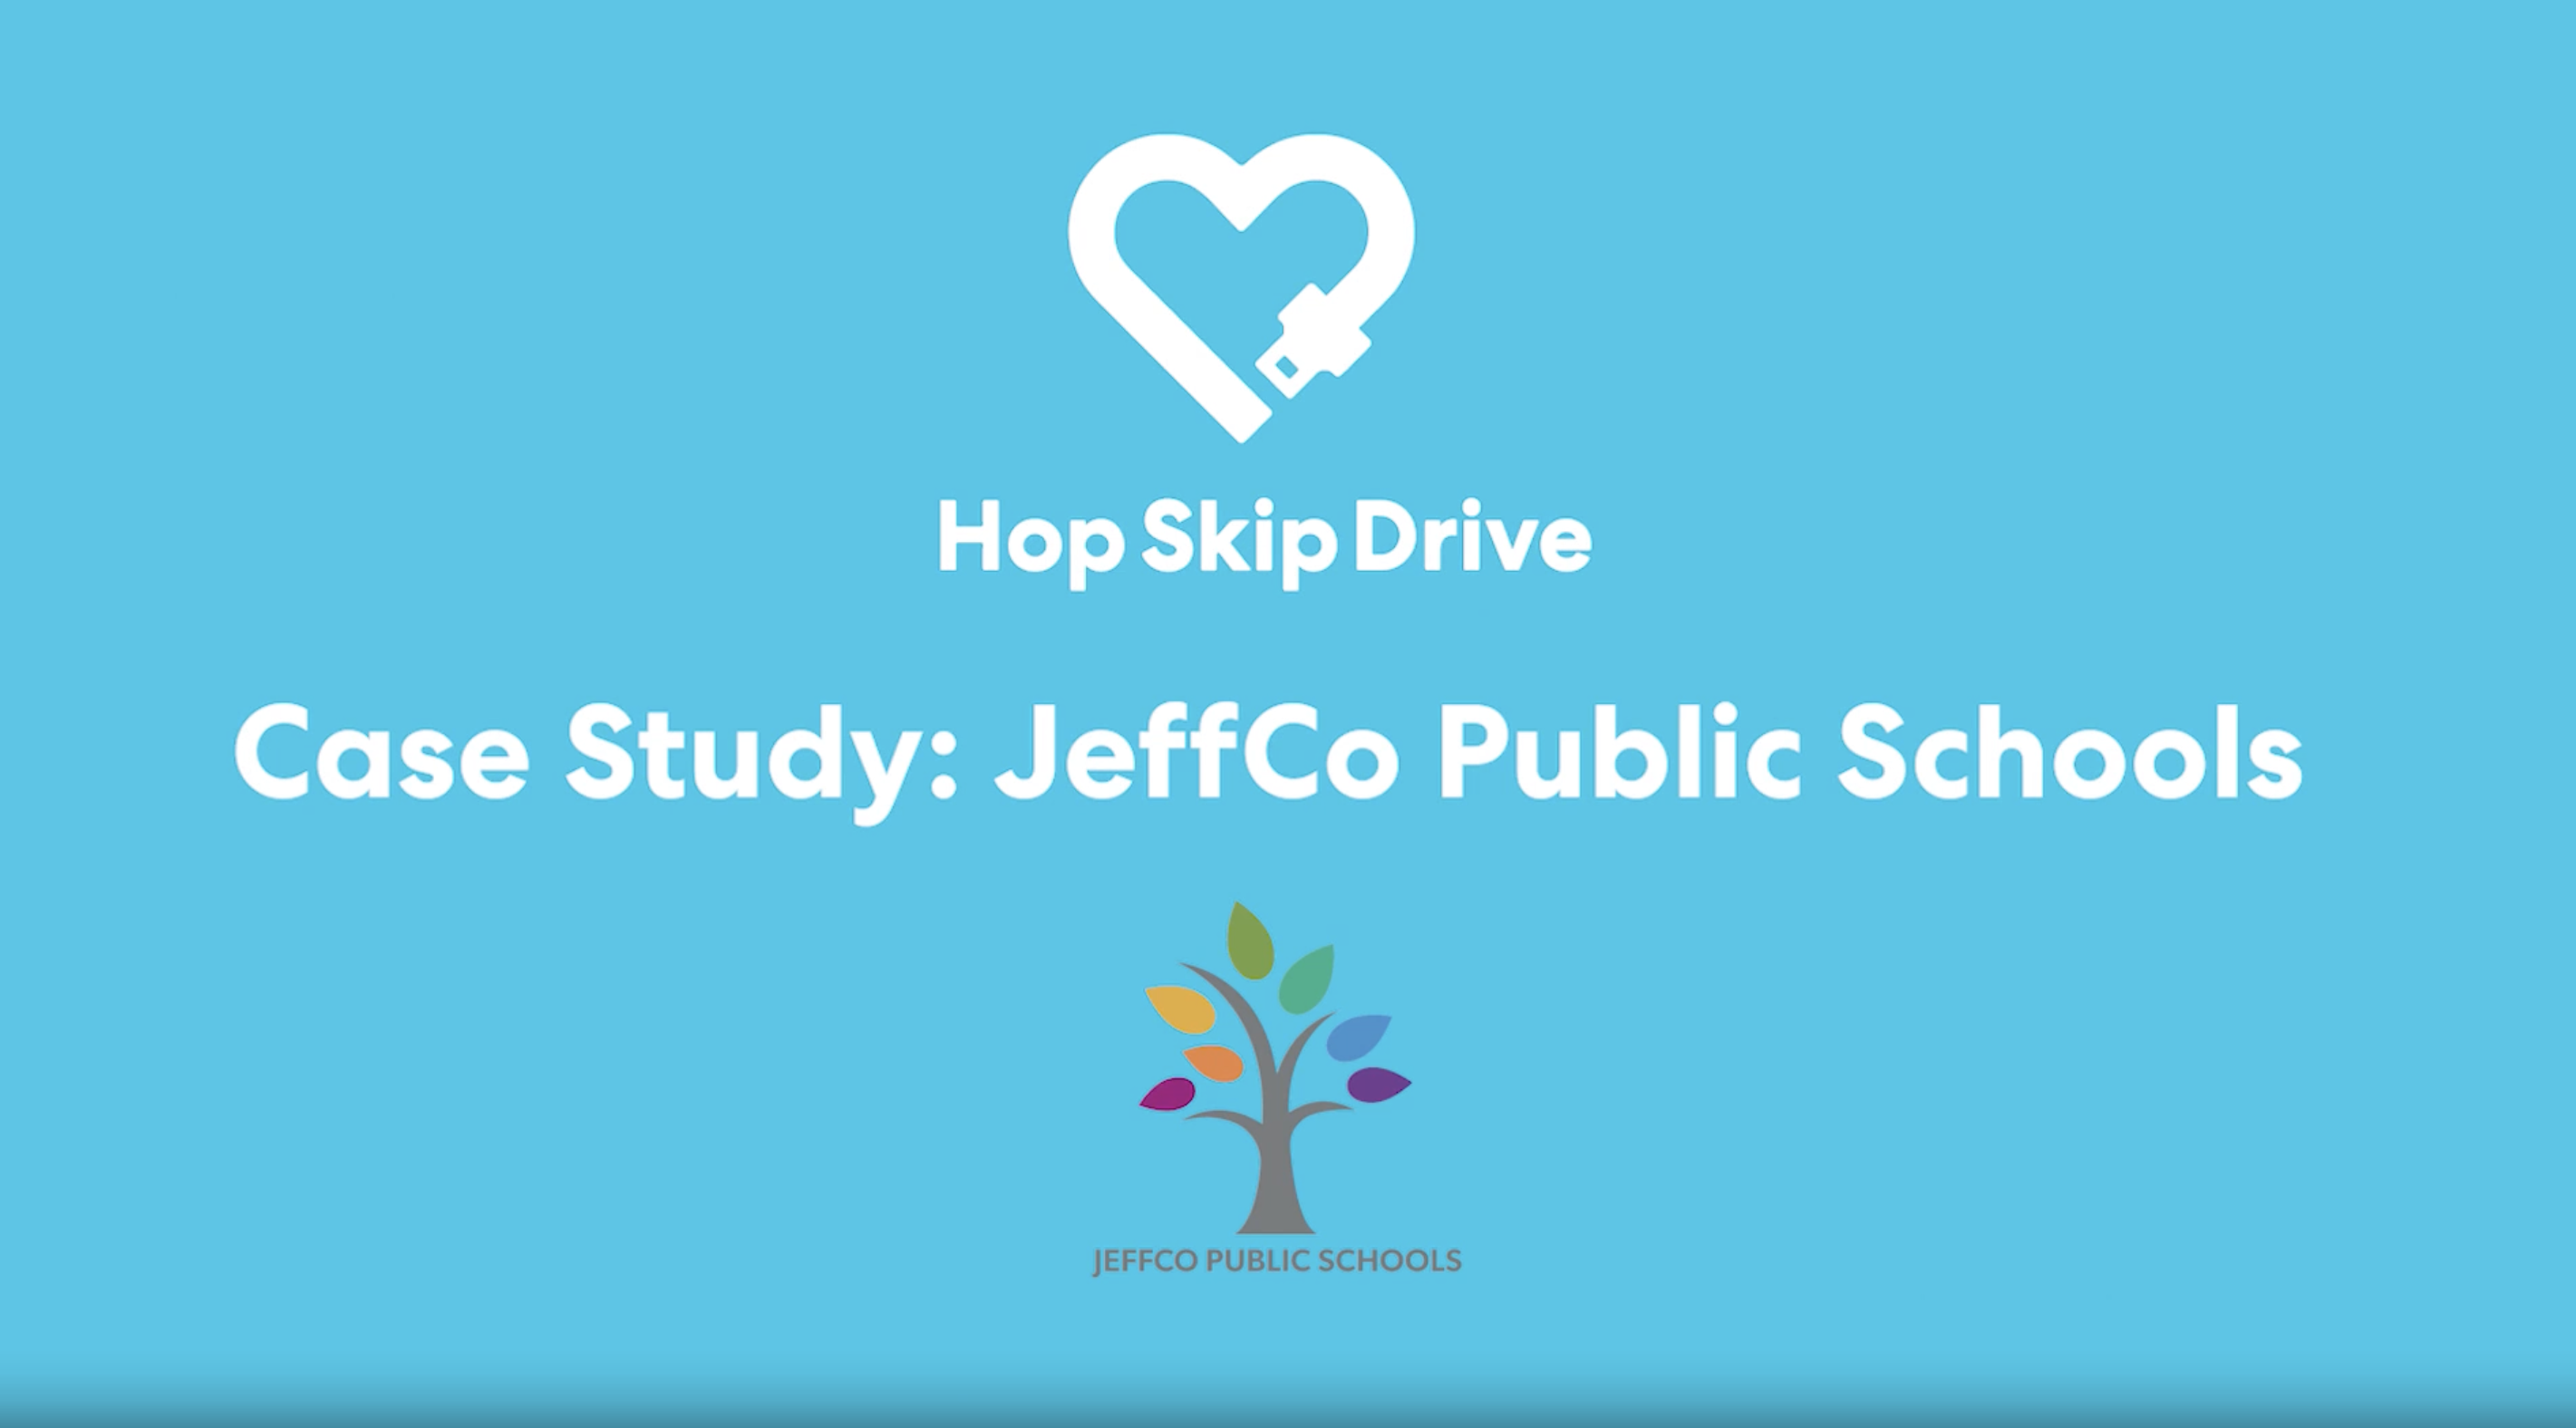 [Video]: JeffCo Public Schools partners with HopSkipDrive